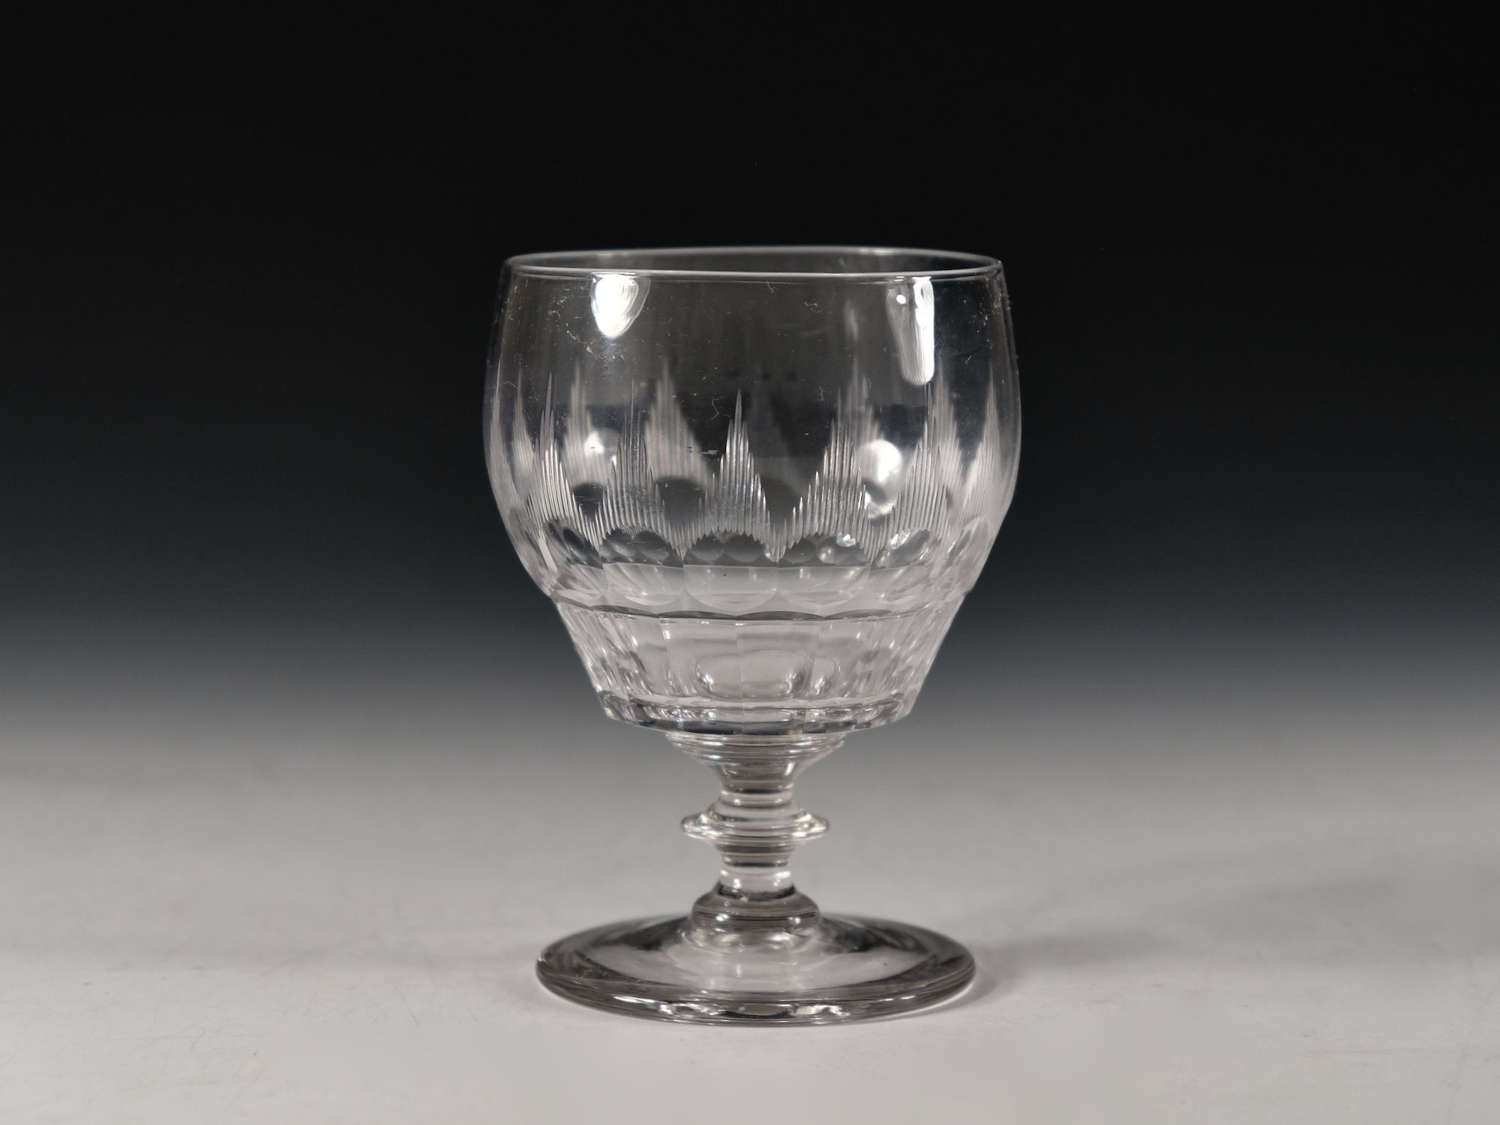 Antique glass rummer English c1830